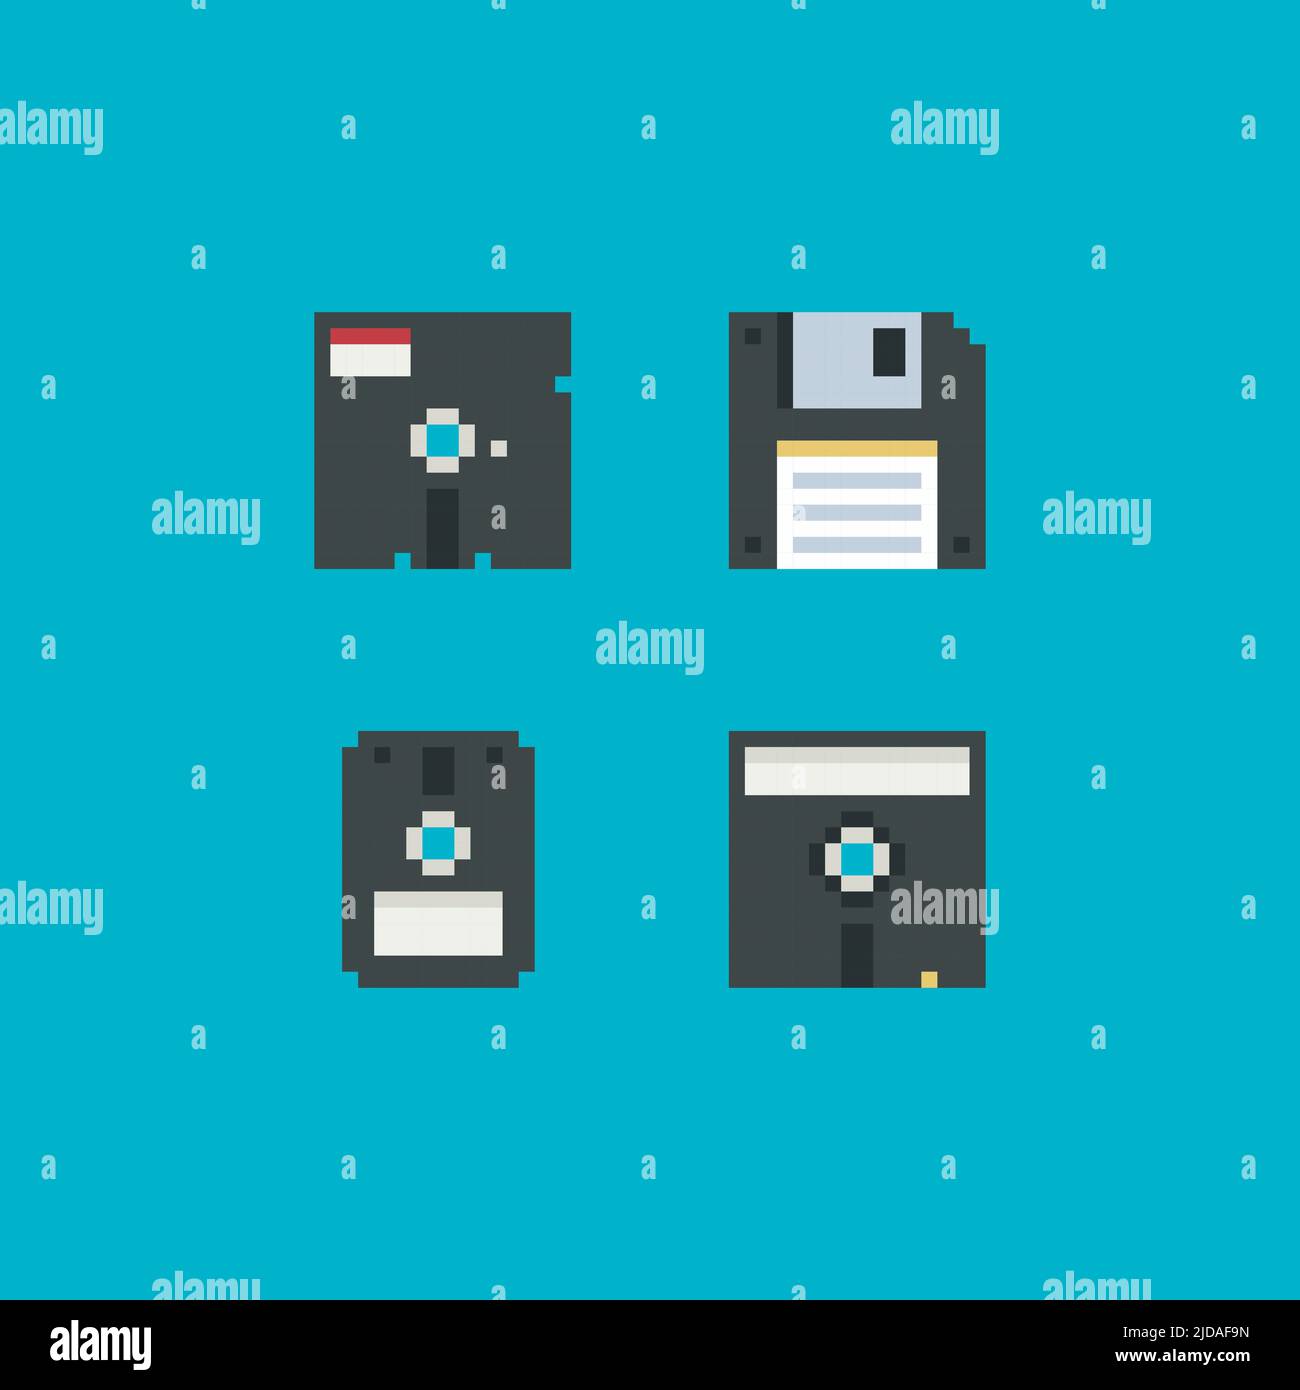 Floppy disk save icon set. Pixel art 8 bit retro. Video game vintage sprite. Isolated vector illustration. Stock Vector